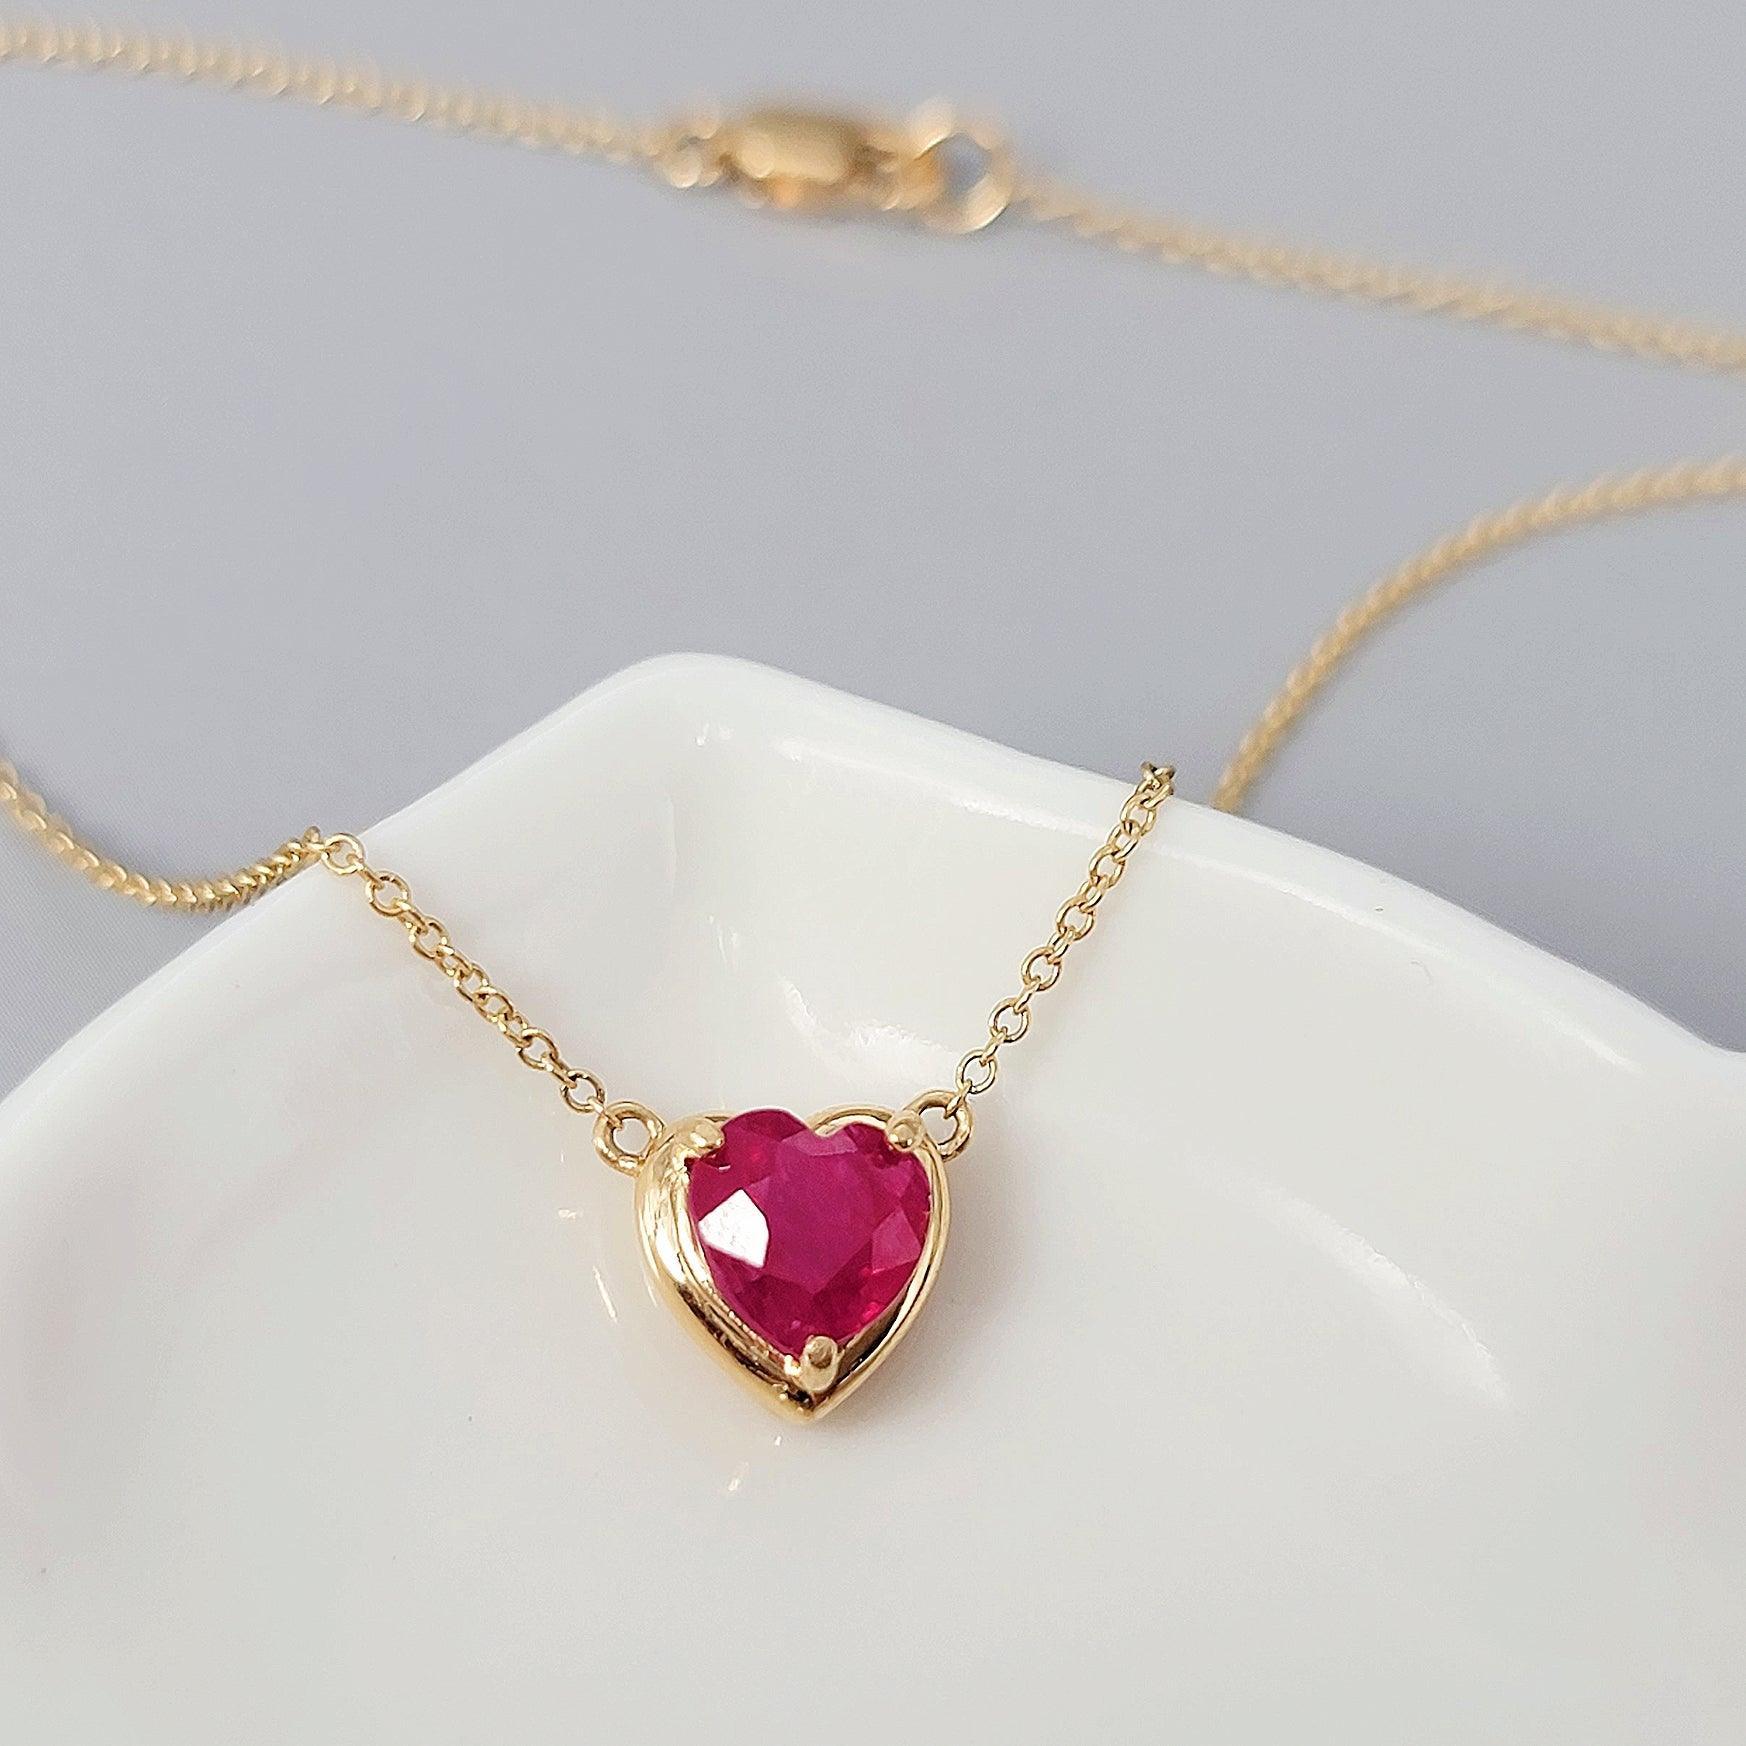 Davie 18k Gold Vermeil Pendant Necklace in Ruby | Kendra Scott